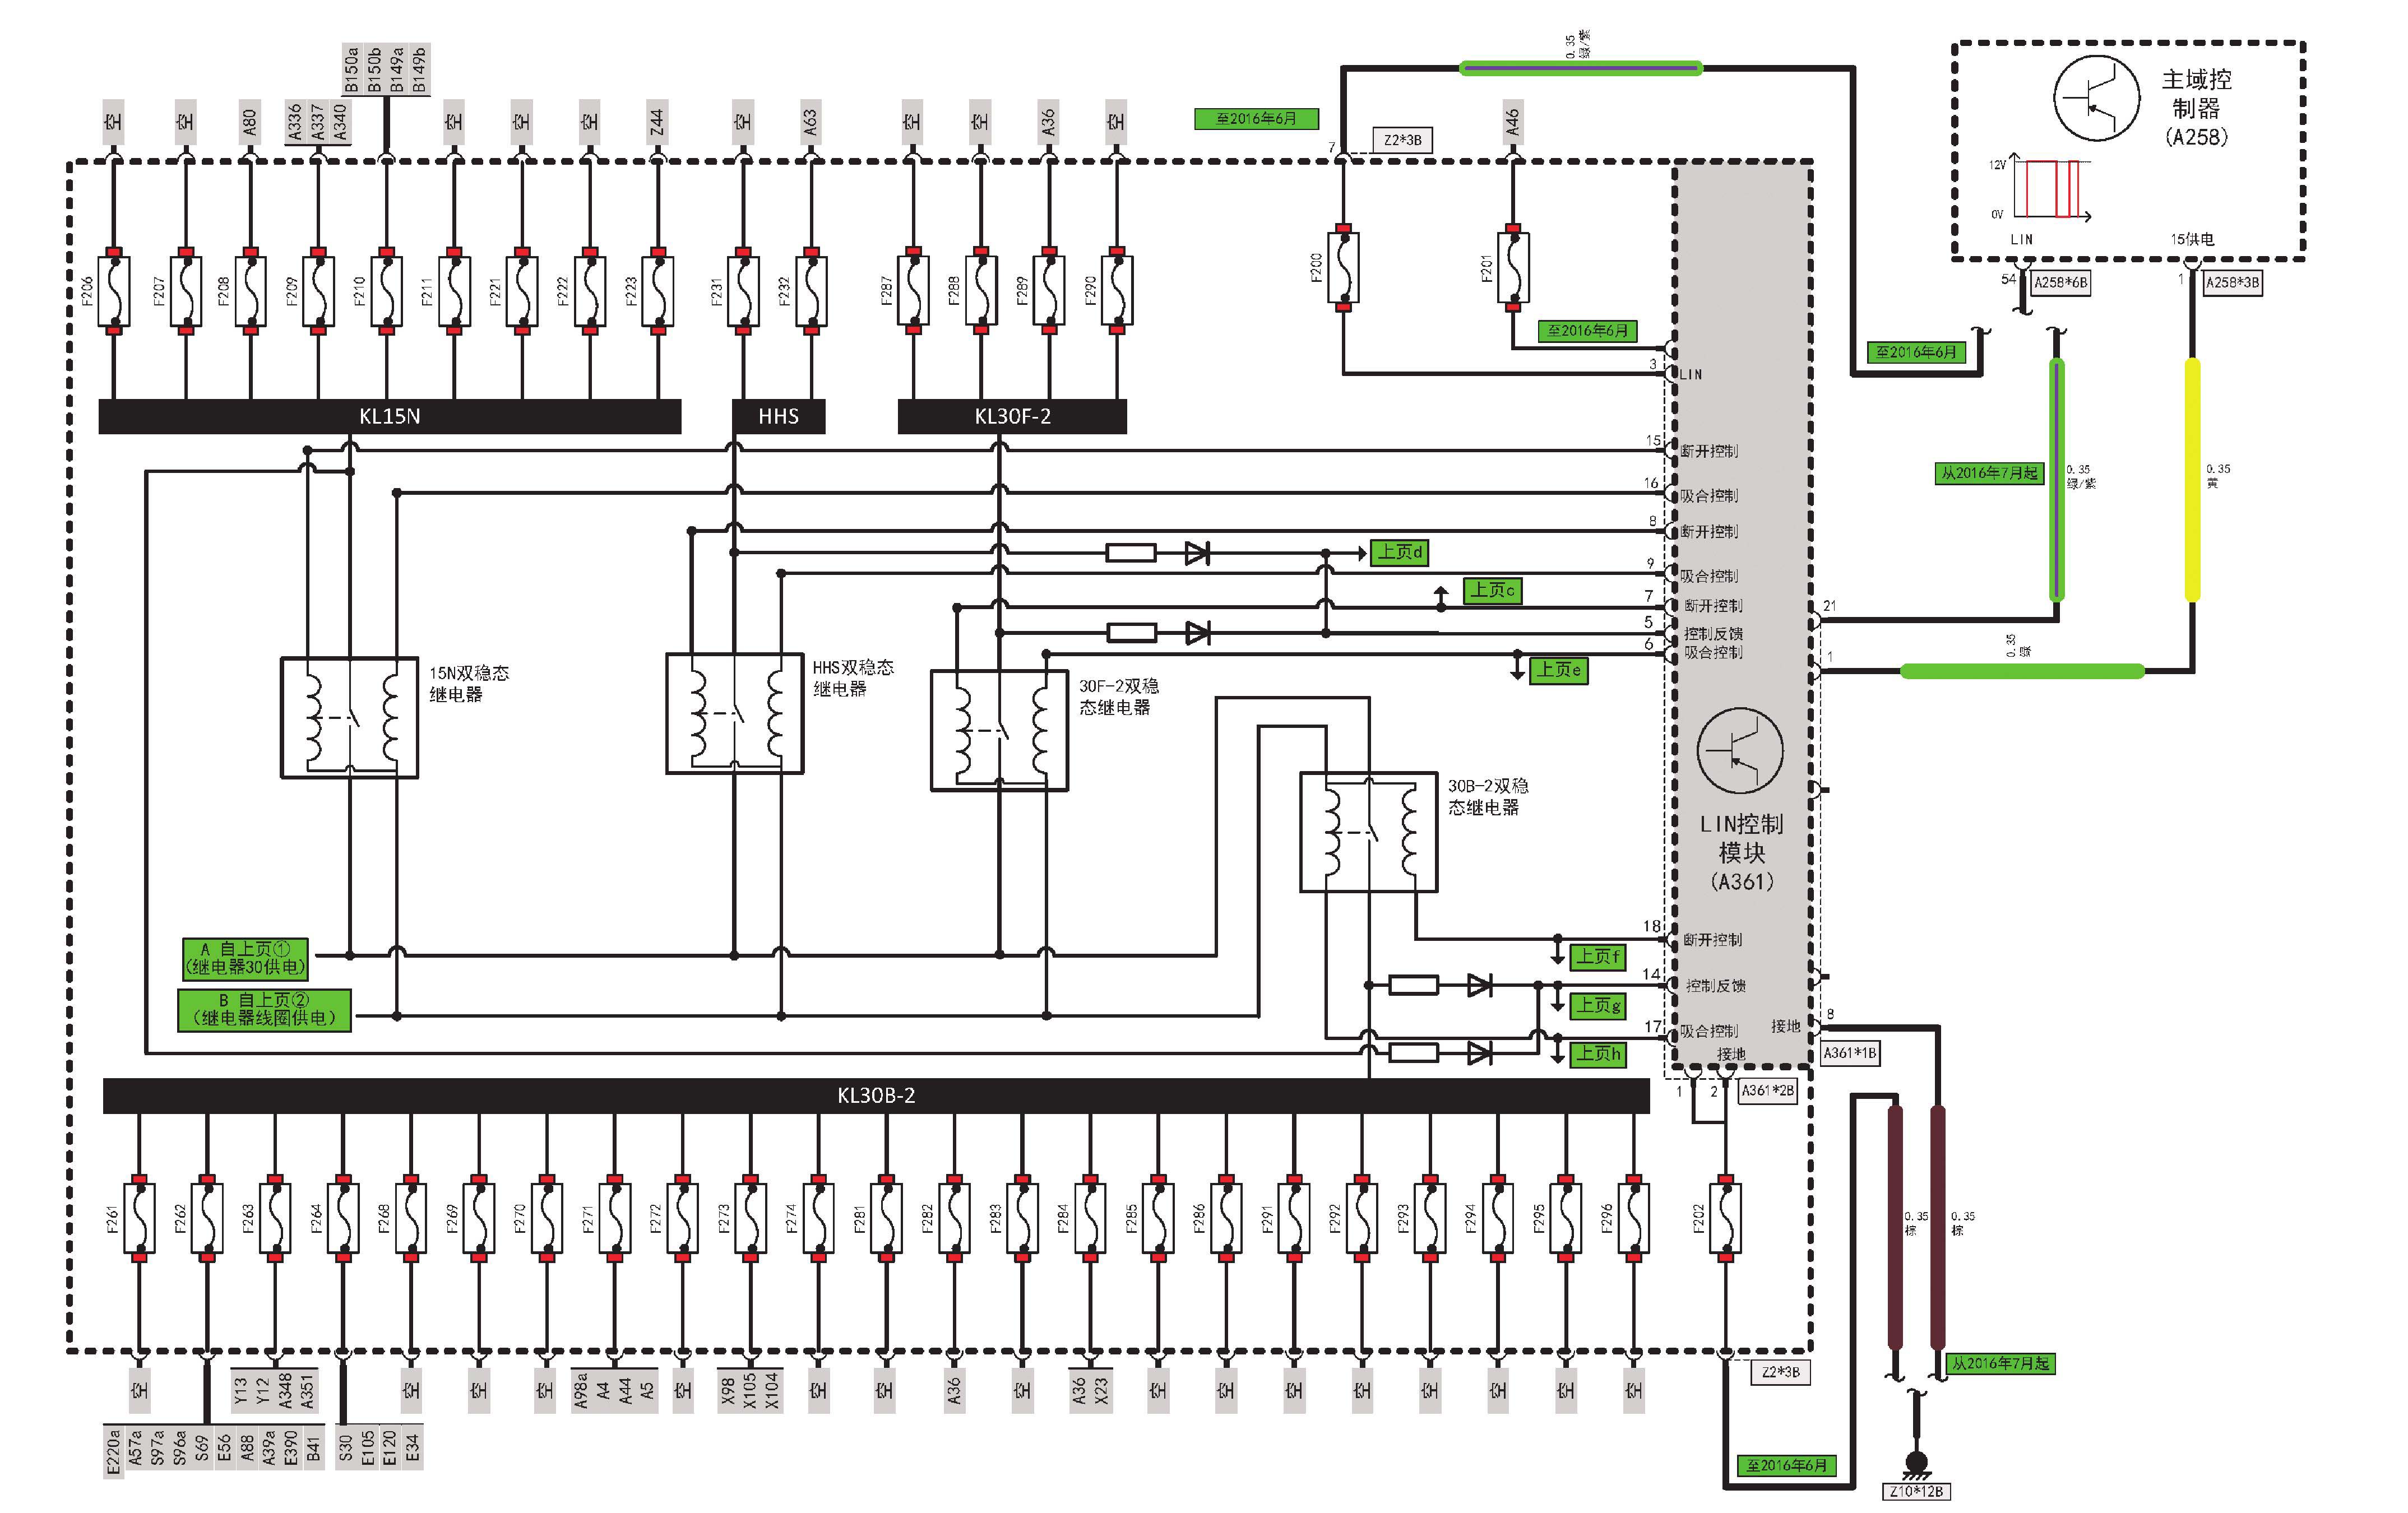 后部配电盒Z2a(30B-2/30F-2/15N/HHS)(图2-3)